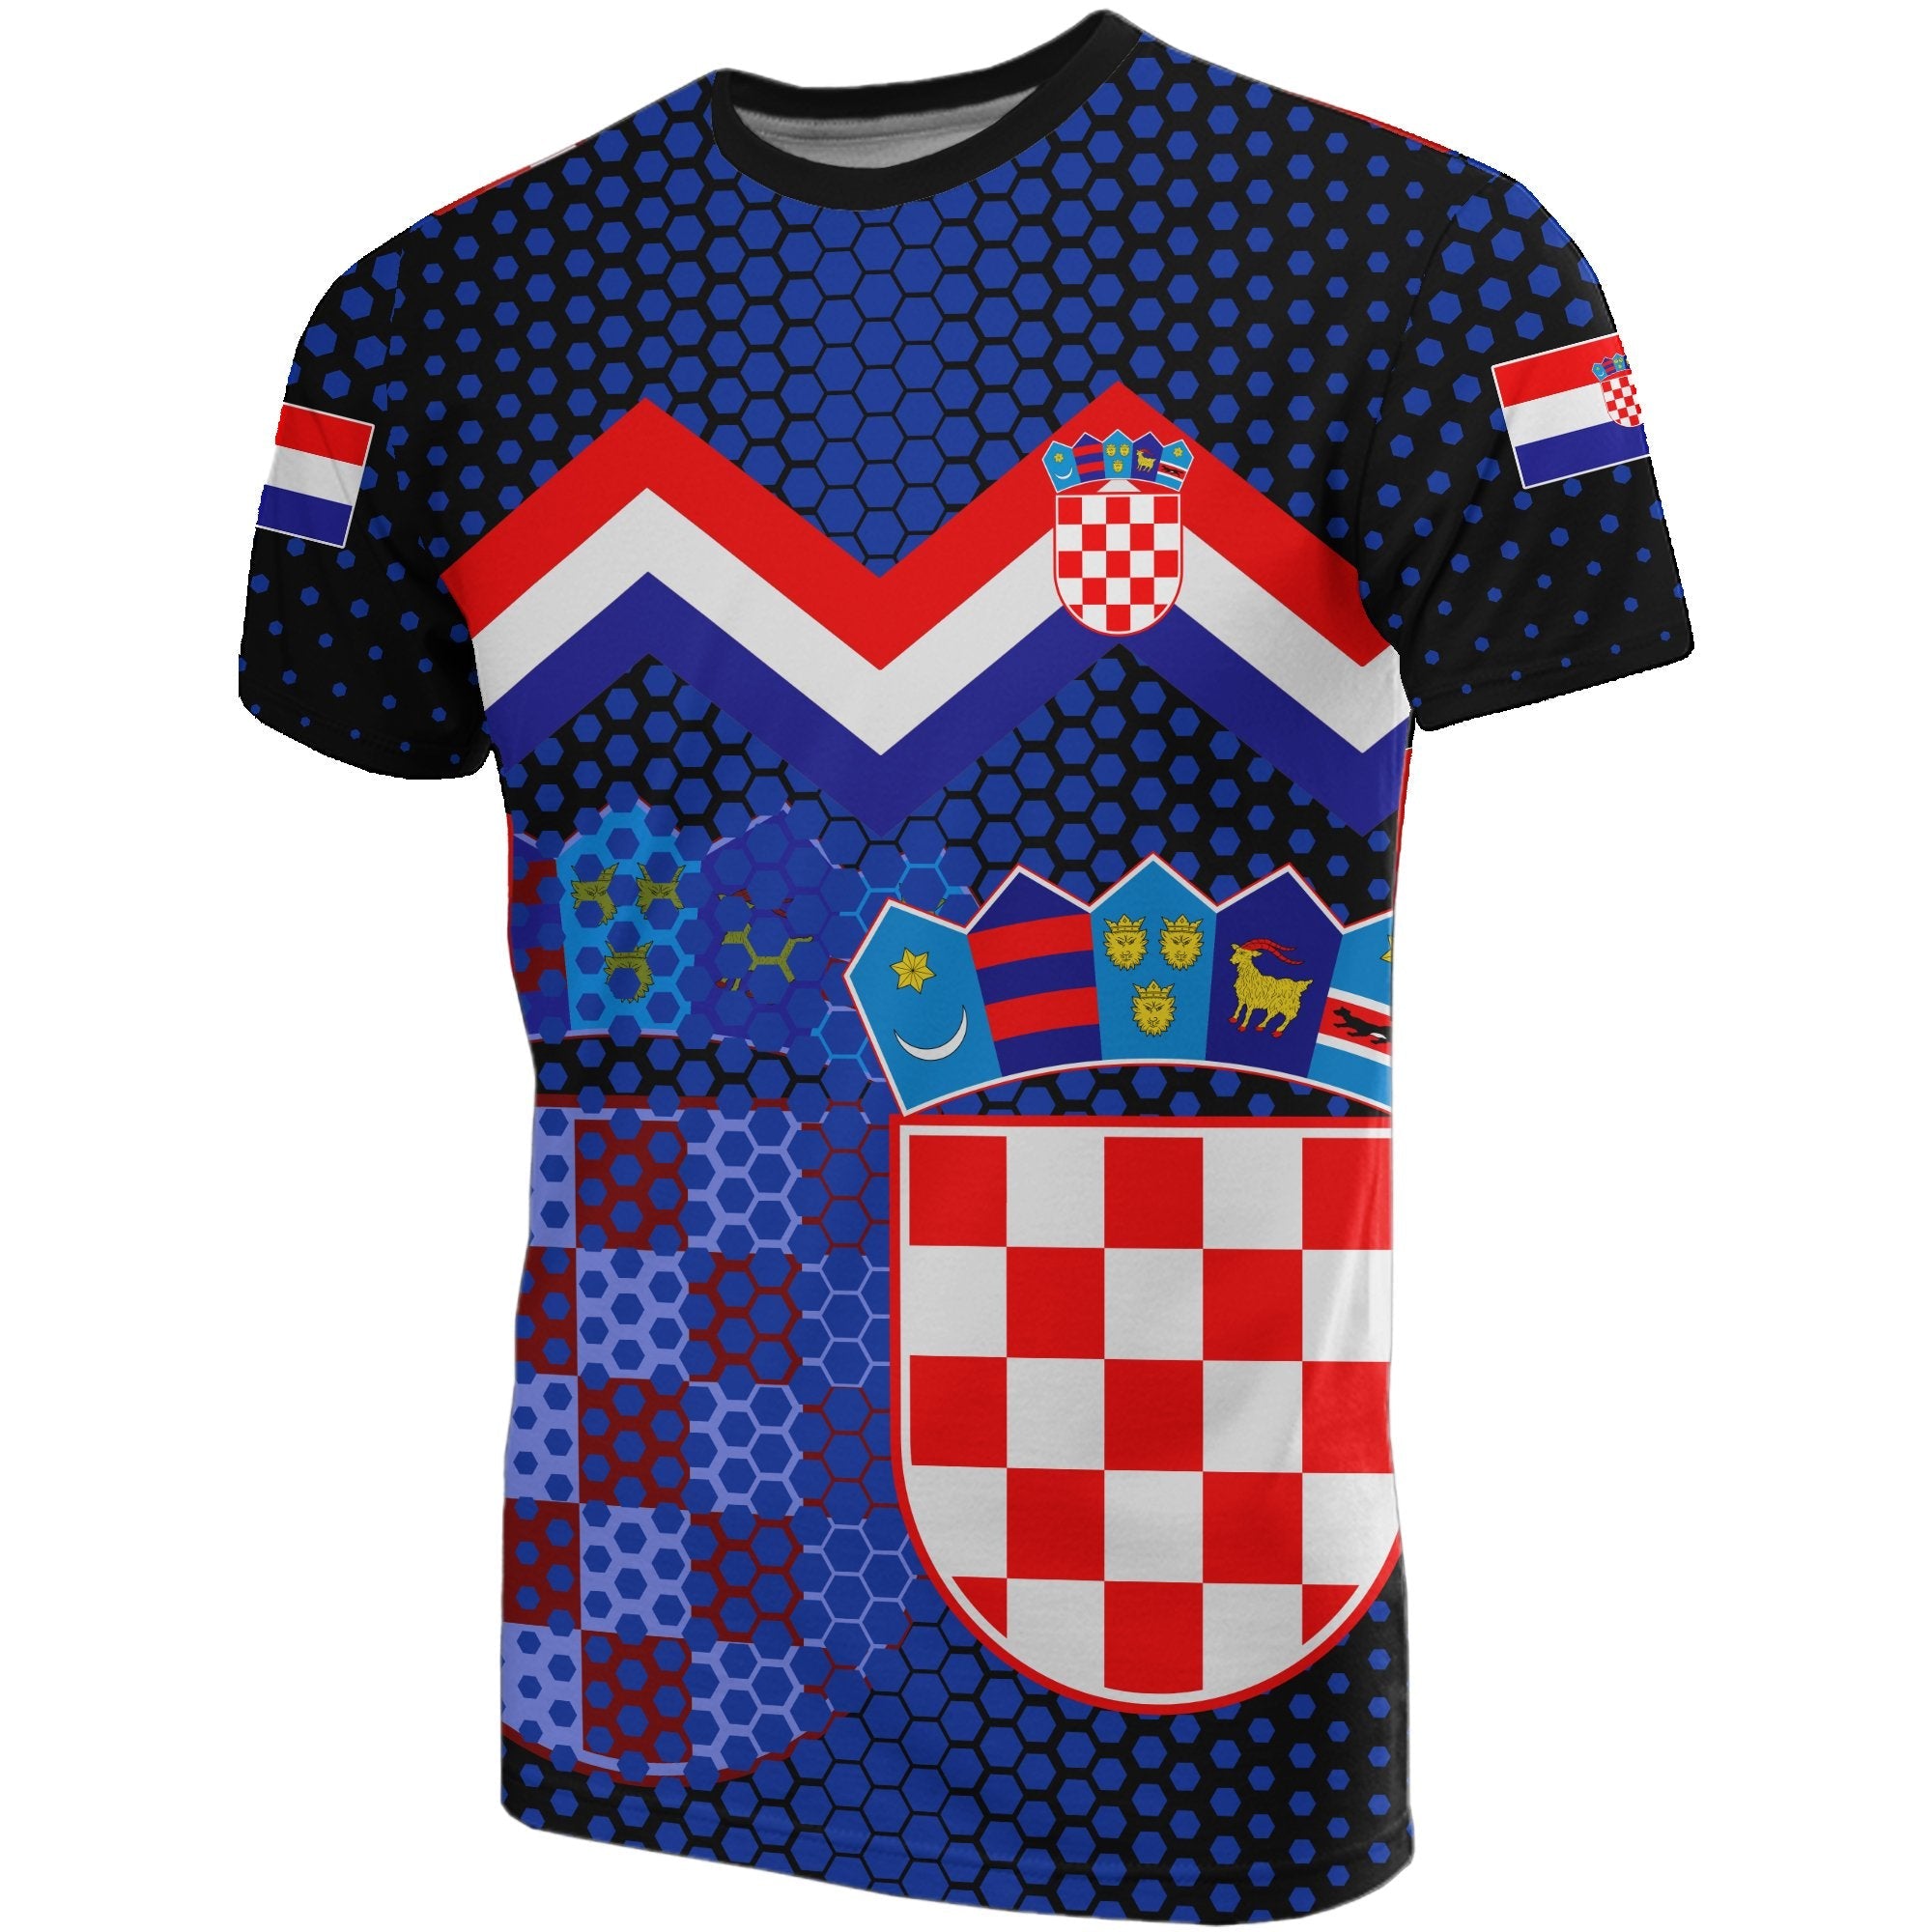 hrvatska-croatia-coat-of-arms-t-shirt-black-3rd